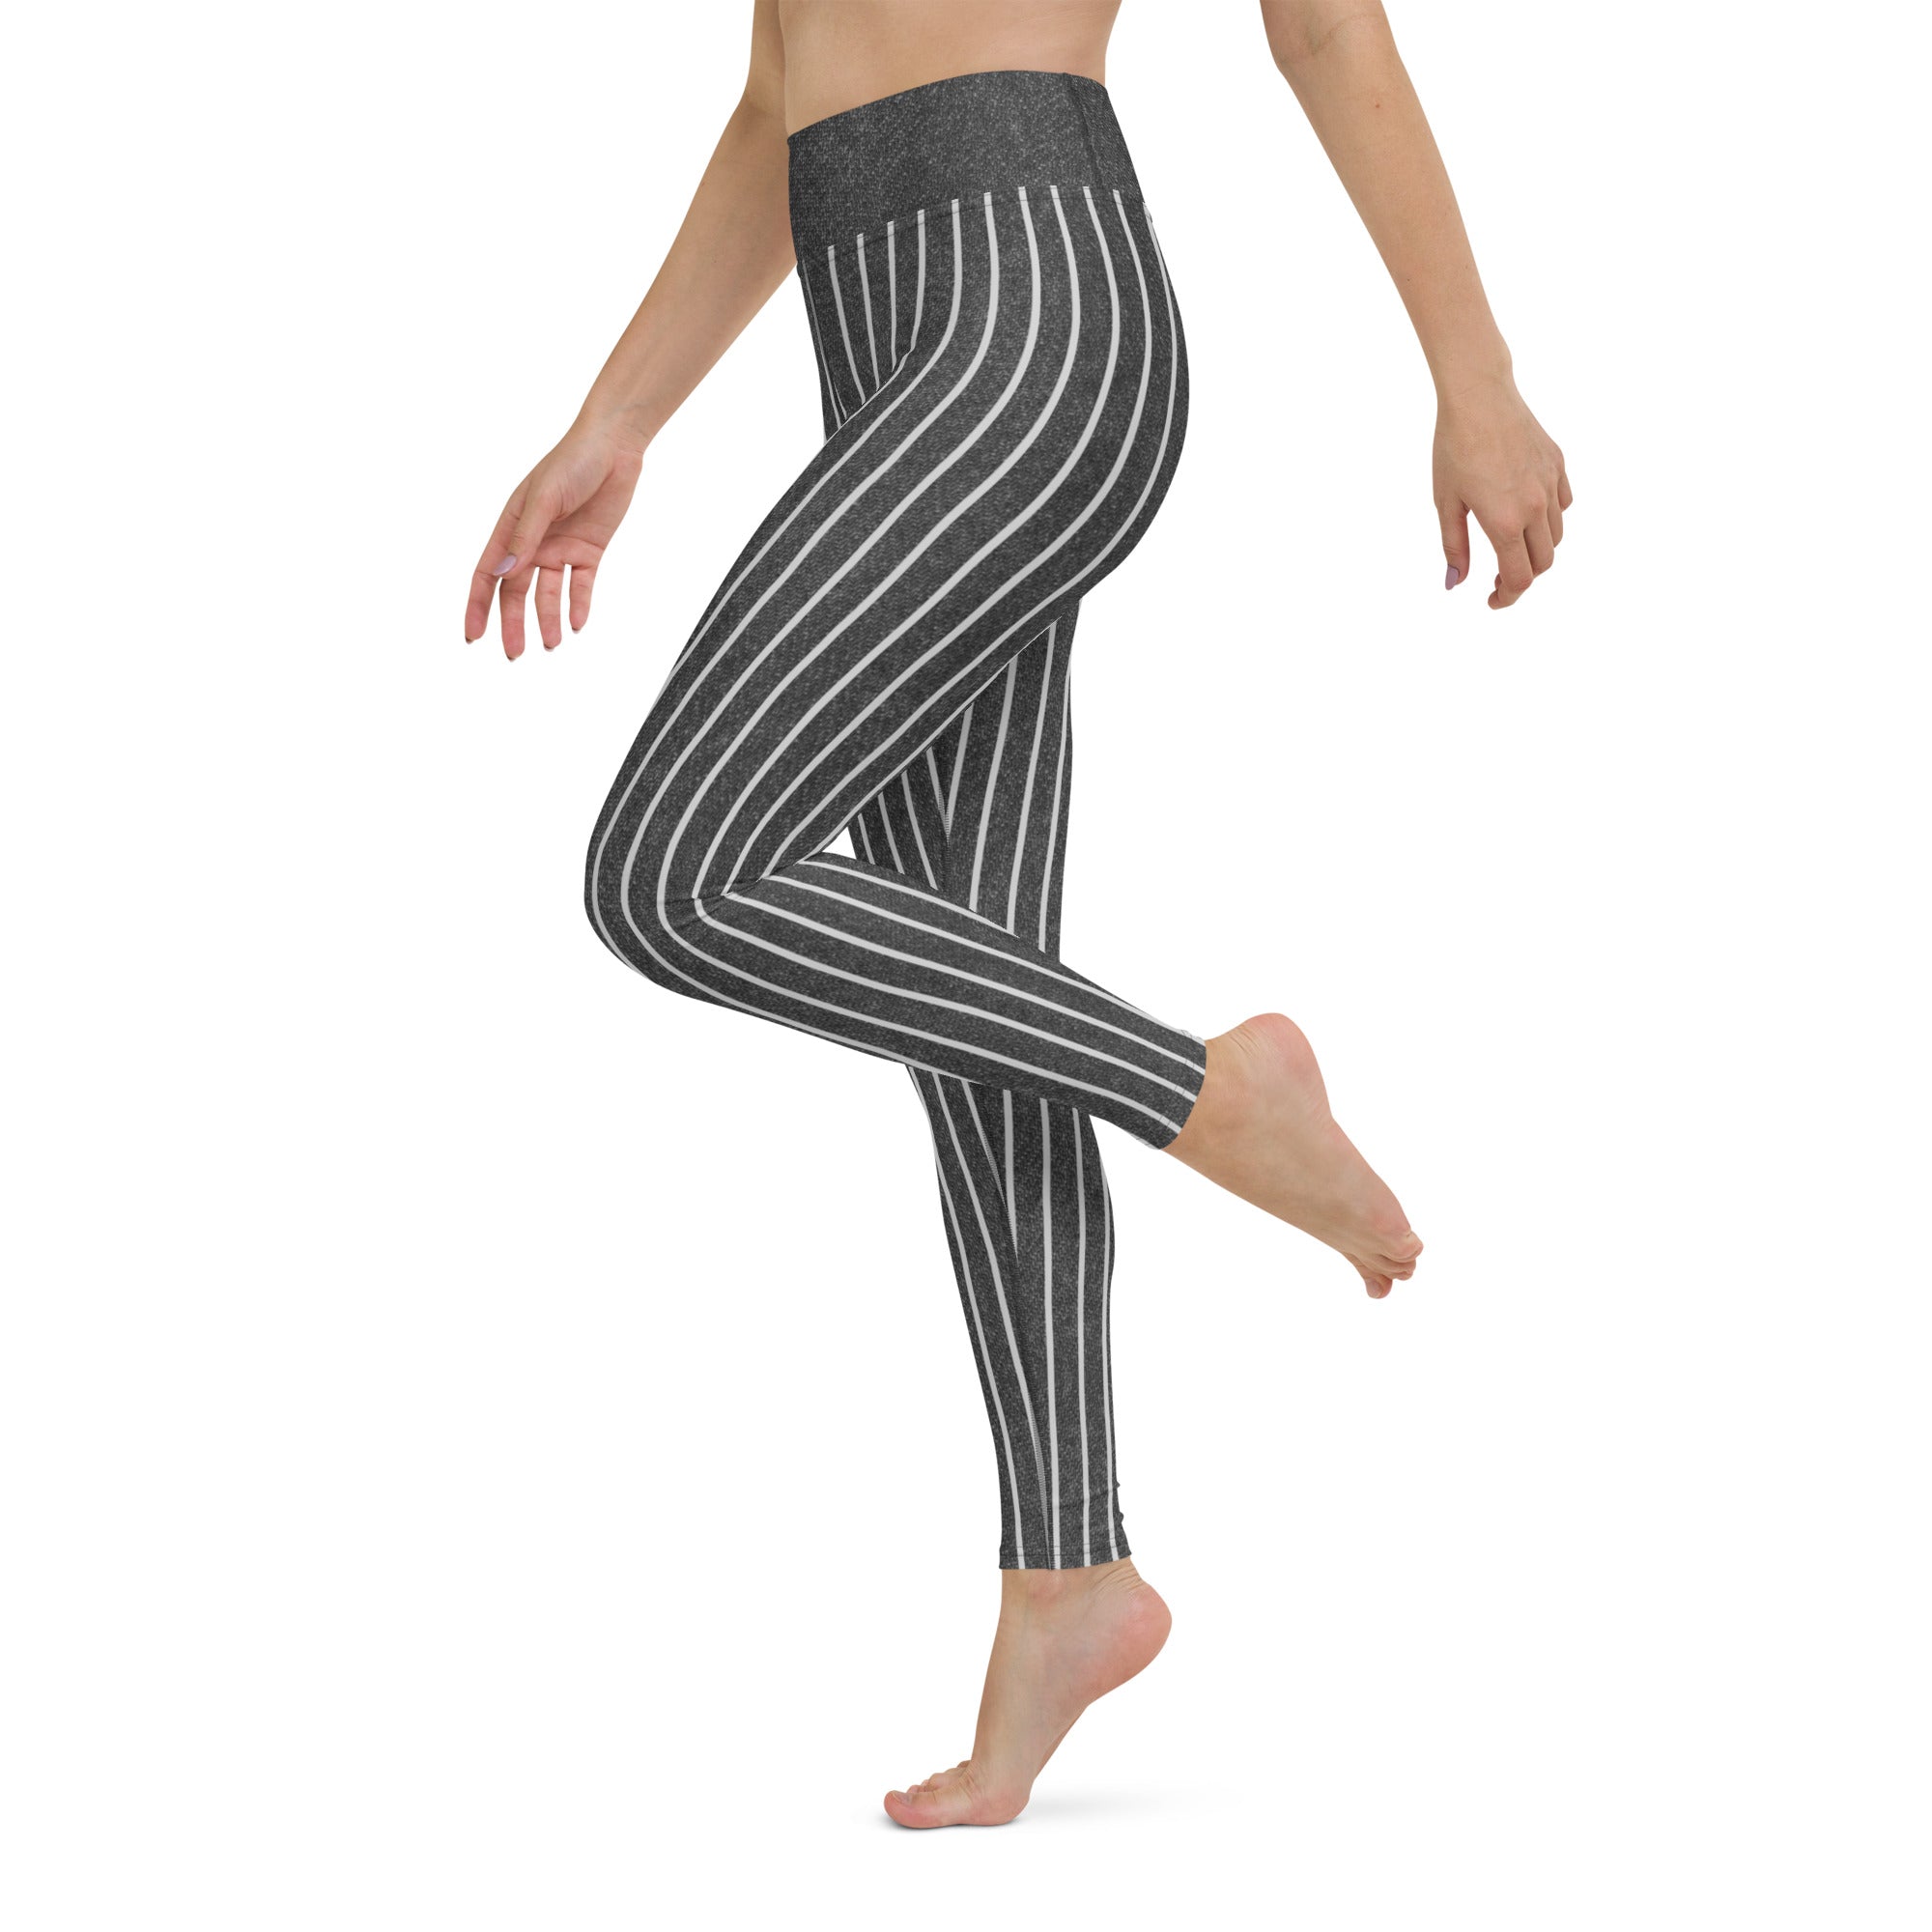 Practicing a yoga pose in Midnight Indigo Yoga Leggings, emphasizing their flexibility and snug fit.